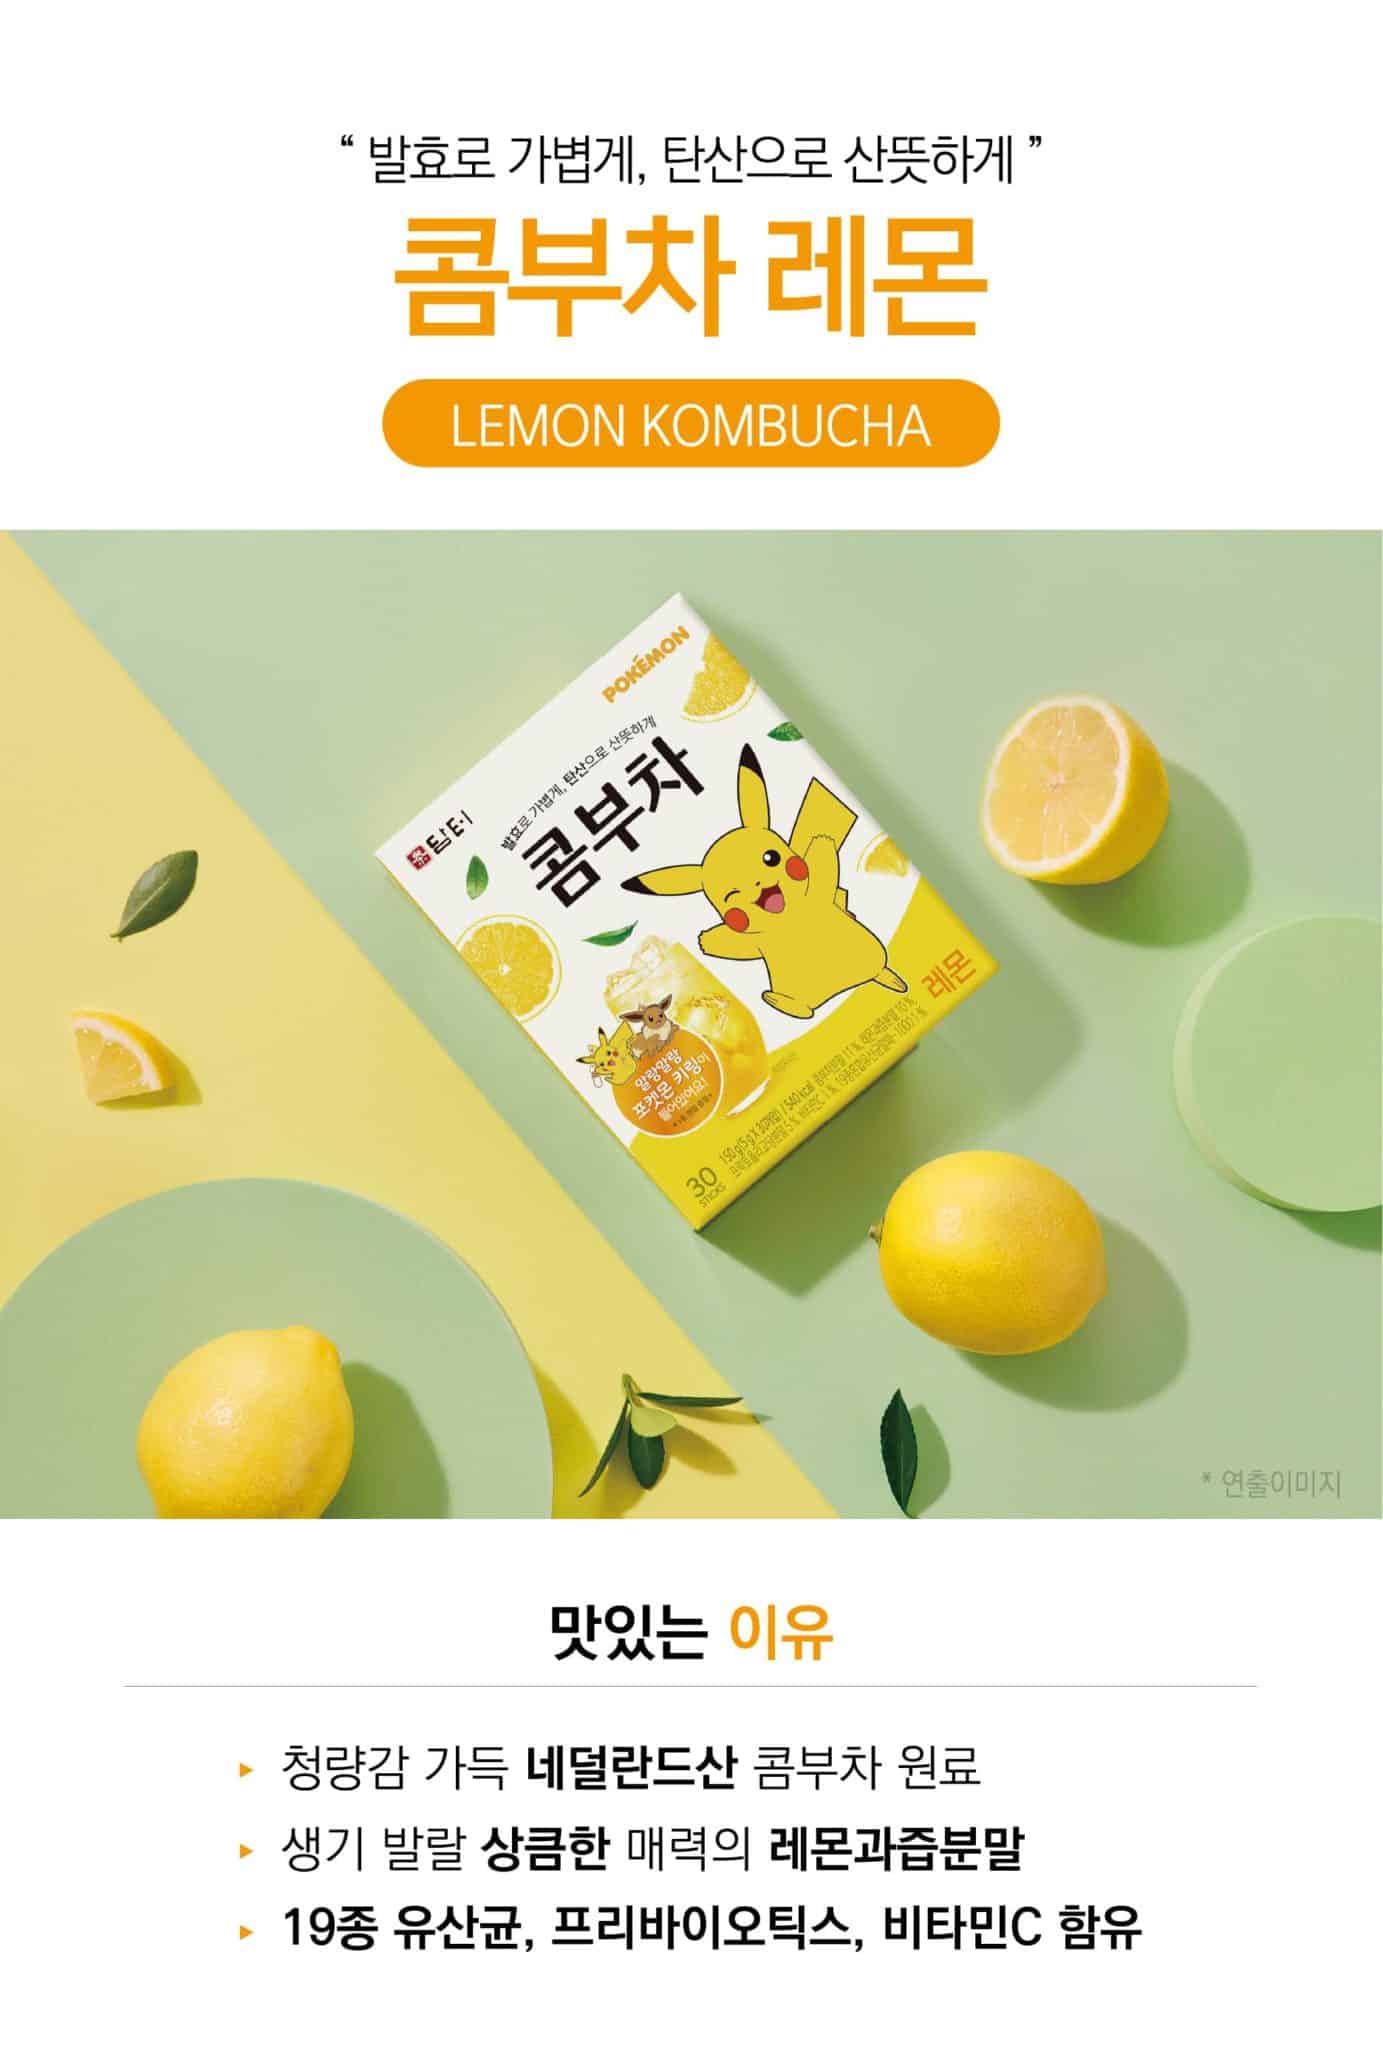 [Damter] Pokemon Kombucha 5g x10 sticks Korean Tea - Now In Seoul